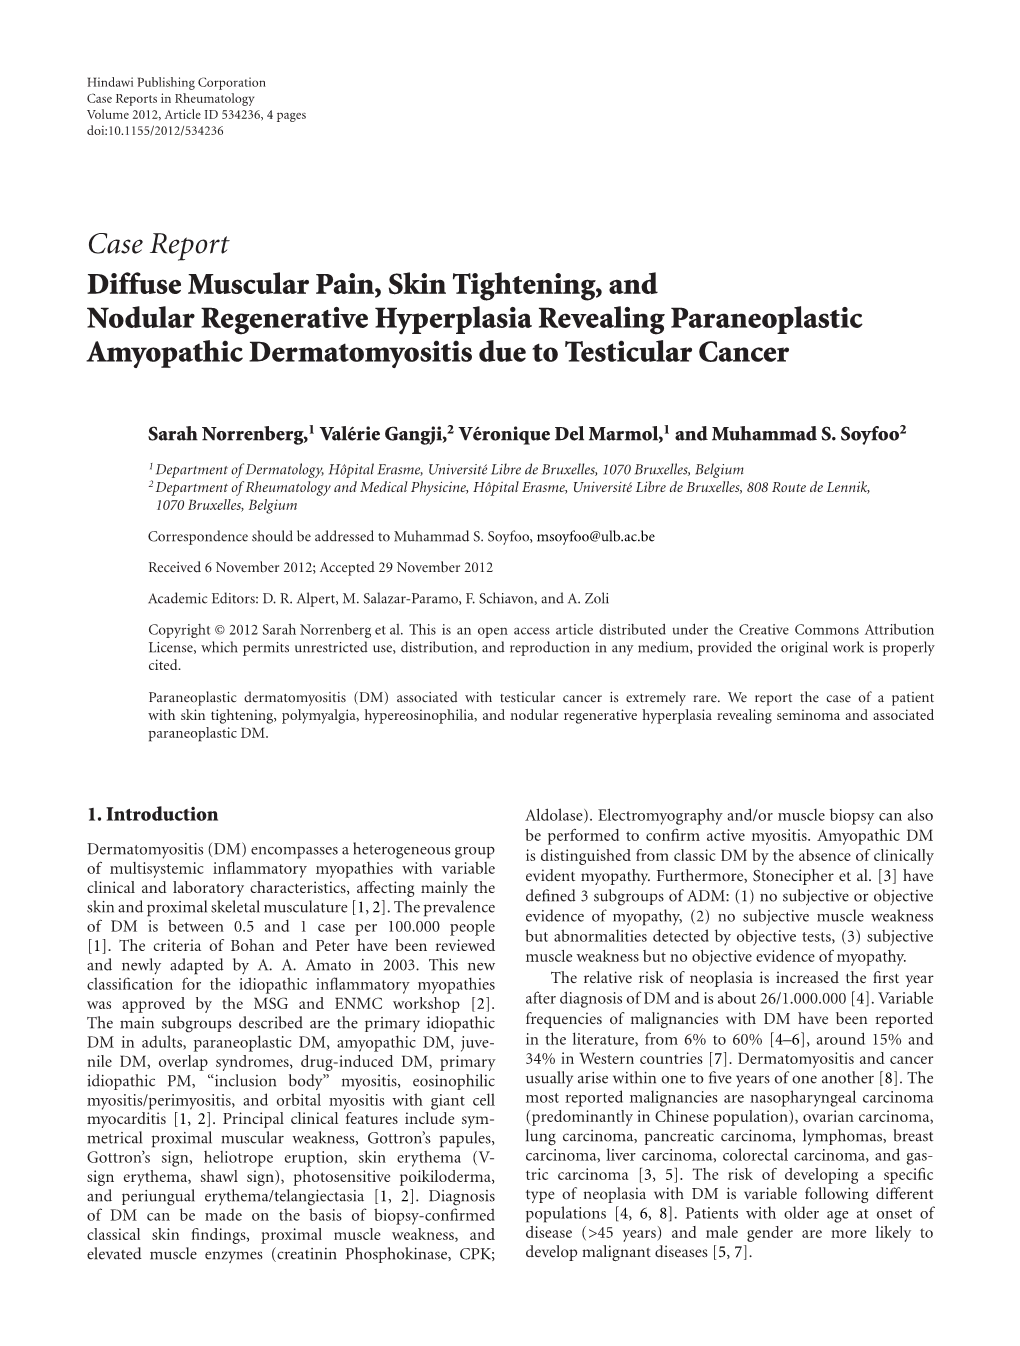 Diffuse Muscular Pain, Skin Tightening, and Nodular Regenerative Hyperplasia Revealing Paraneoplastic Amyopathic Dermatomyositis Due to Testicular Cancer